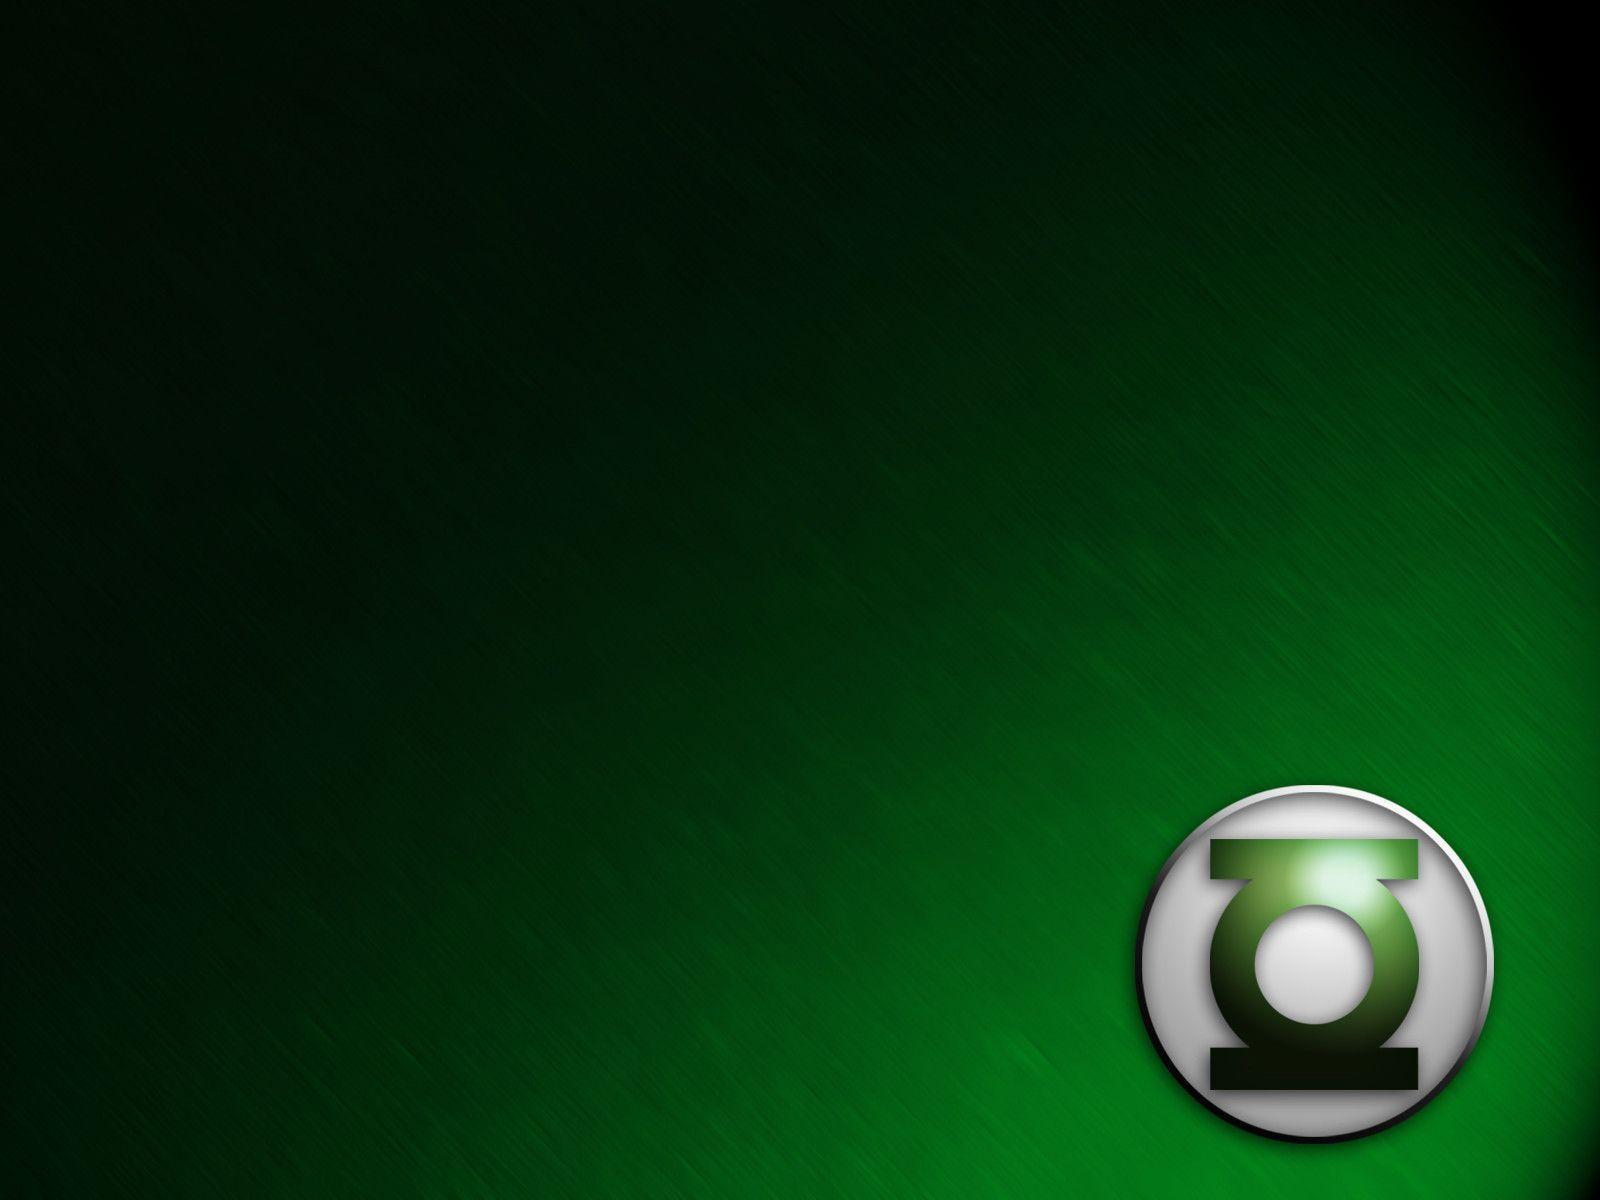 Green Lantern HD Wallpapers